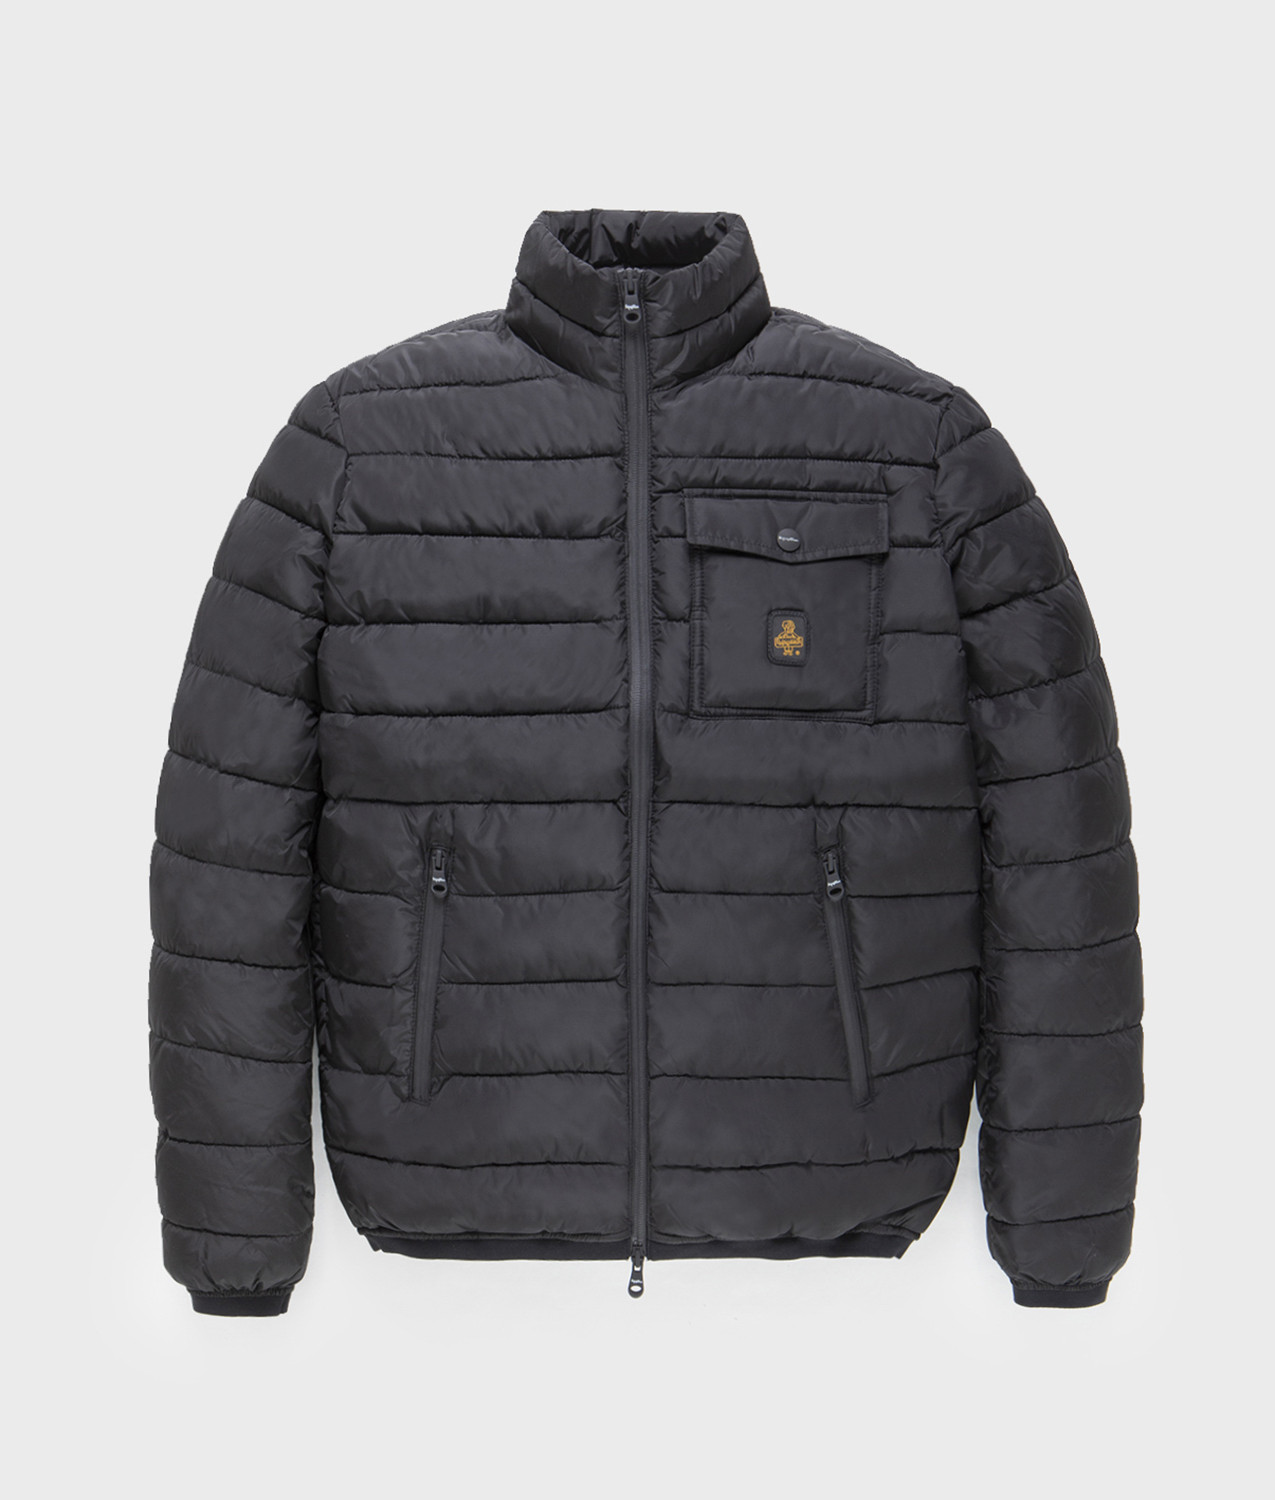 Refrigiwear / Piumino Uomo Hunter Jacket Nylon Grigio Prezzo 250,00